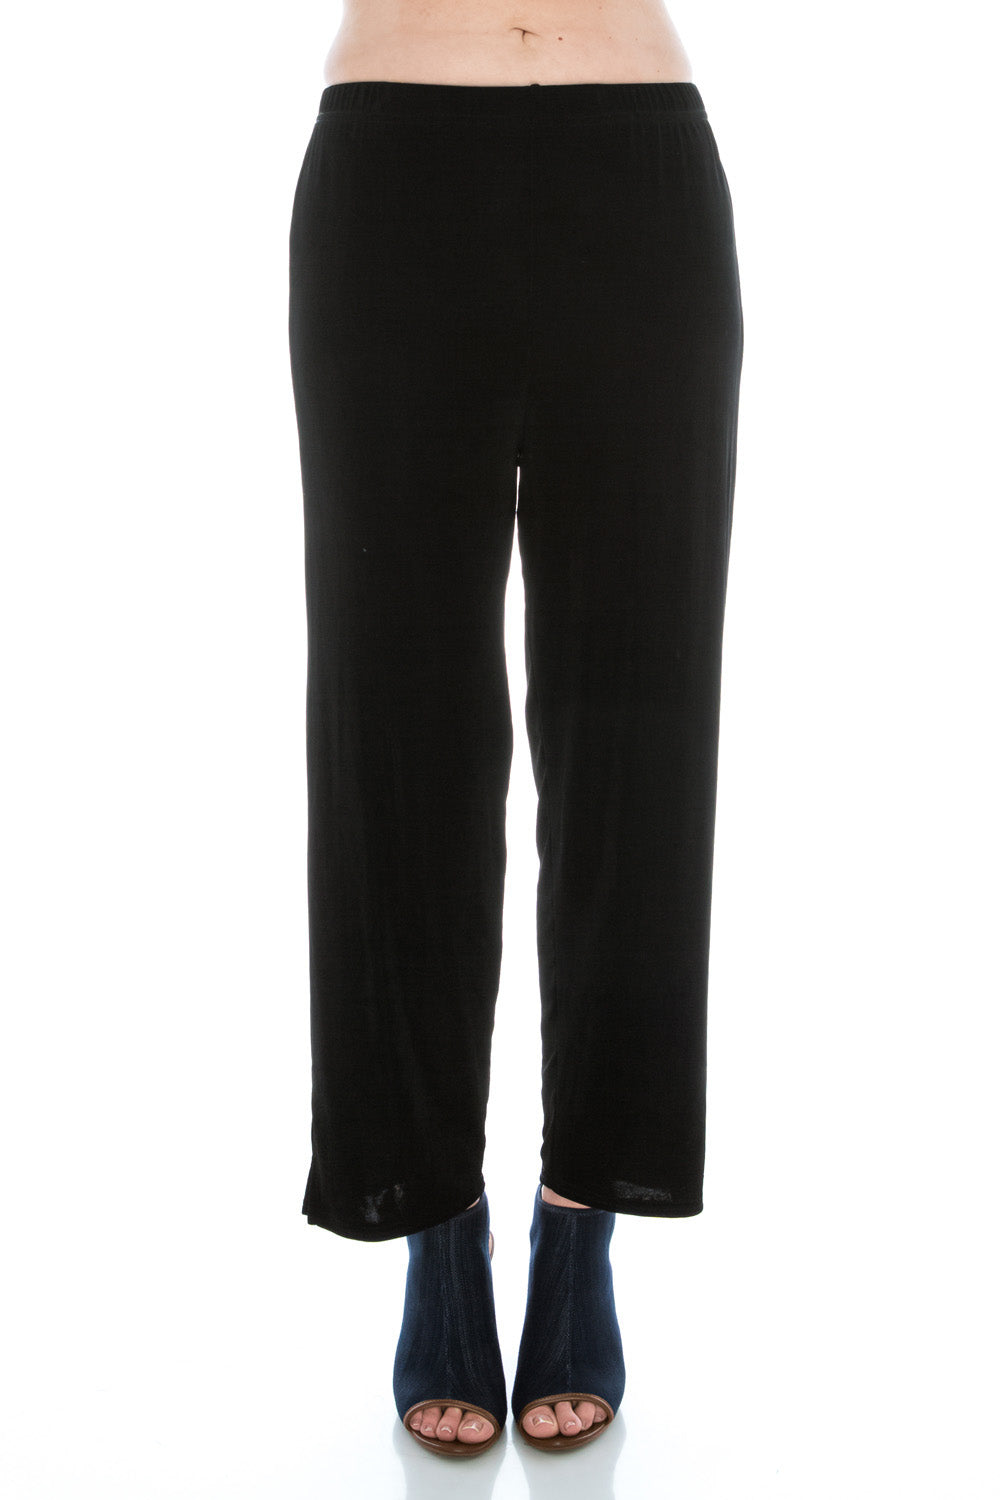 Jostar Women's Non Iron Ankle Length Pants Plus, 501AY-X - Jostar Online